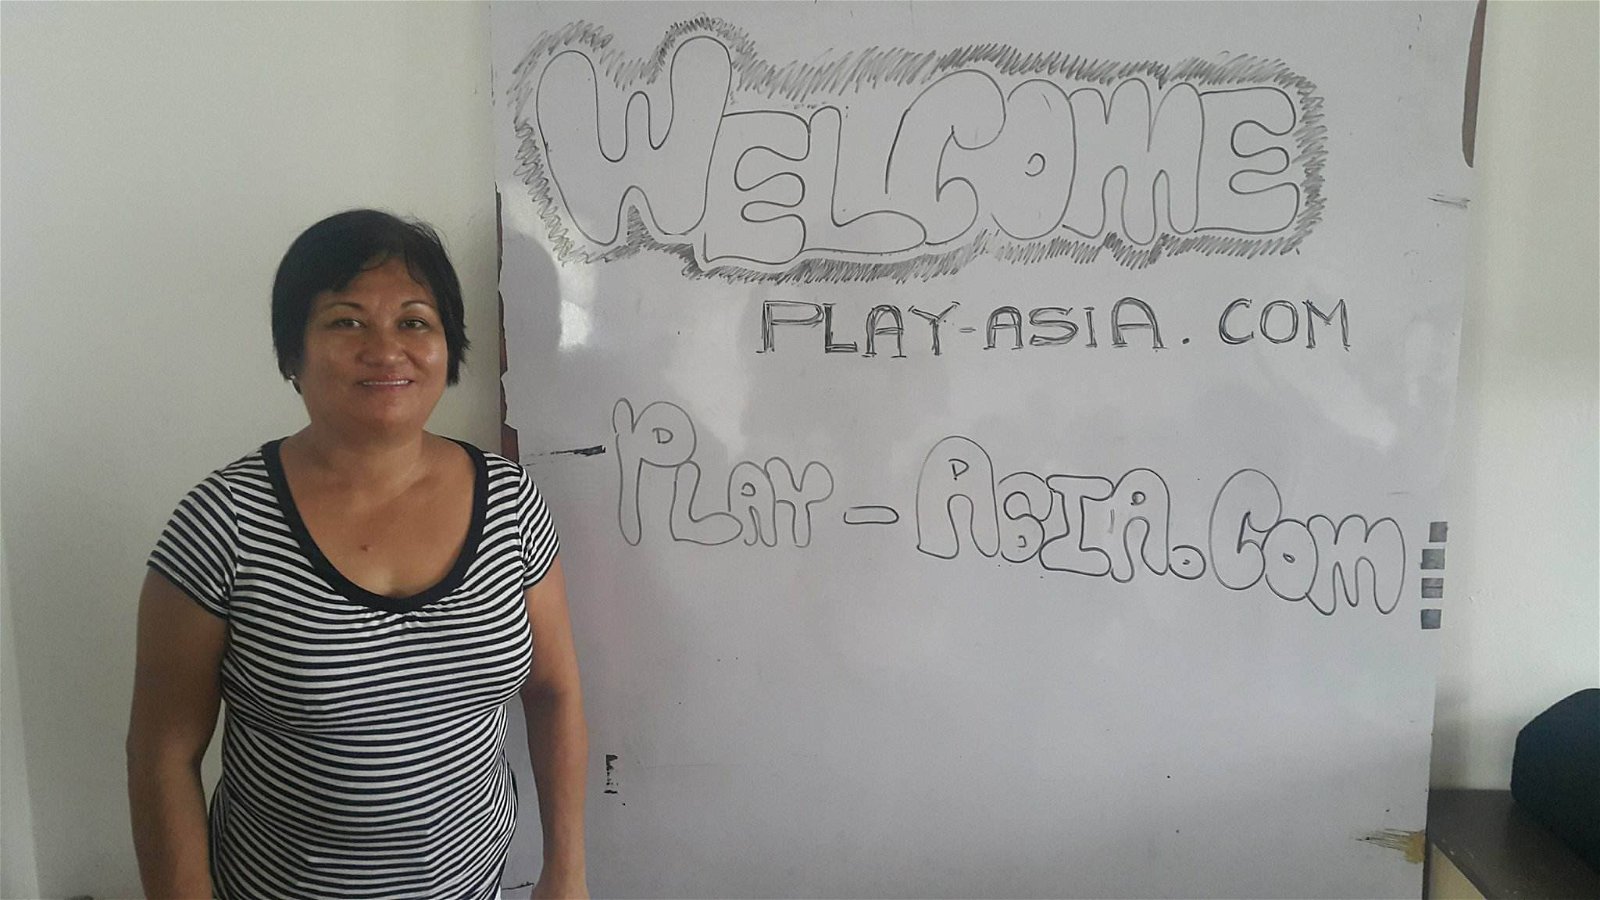 play-asia.com, corporate social responsibility, west bajac-bajac olongapo, play-asia.com charity, play-asia.com subic, tesda olongapo